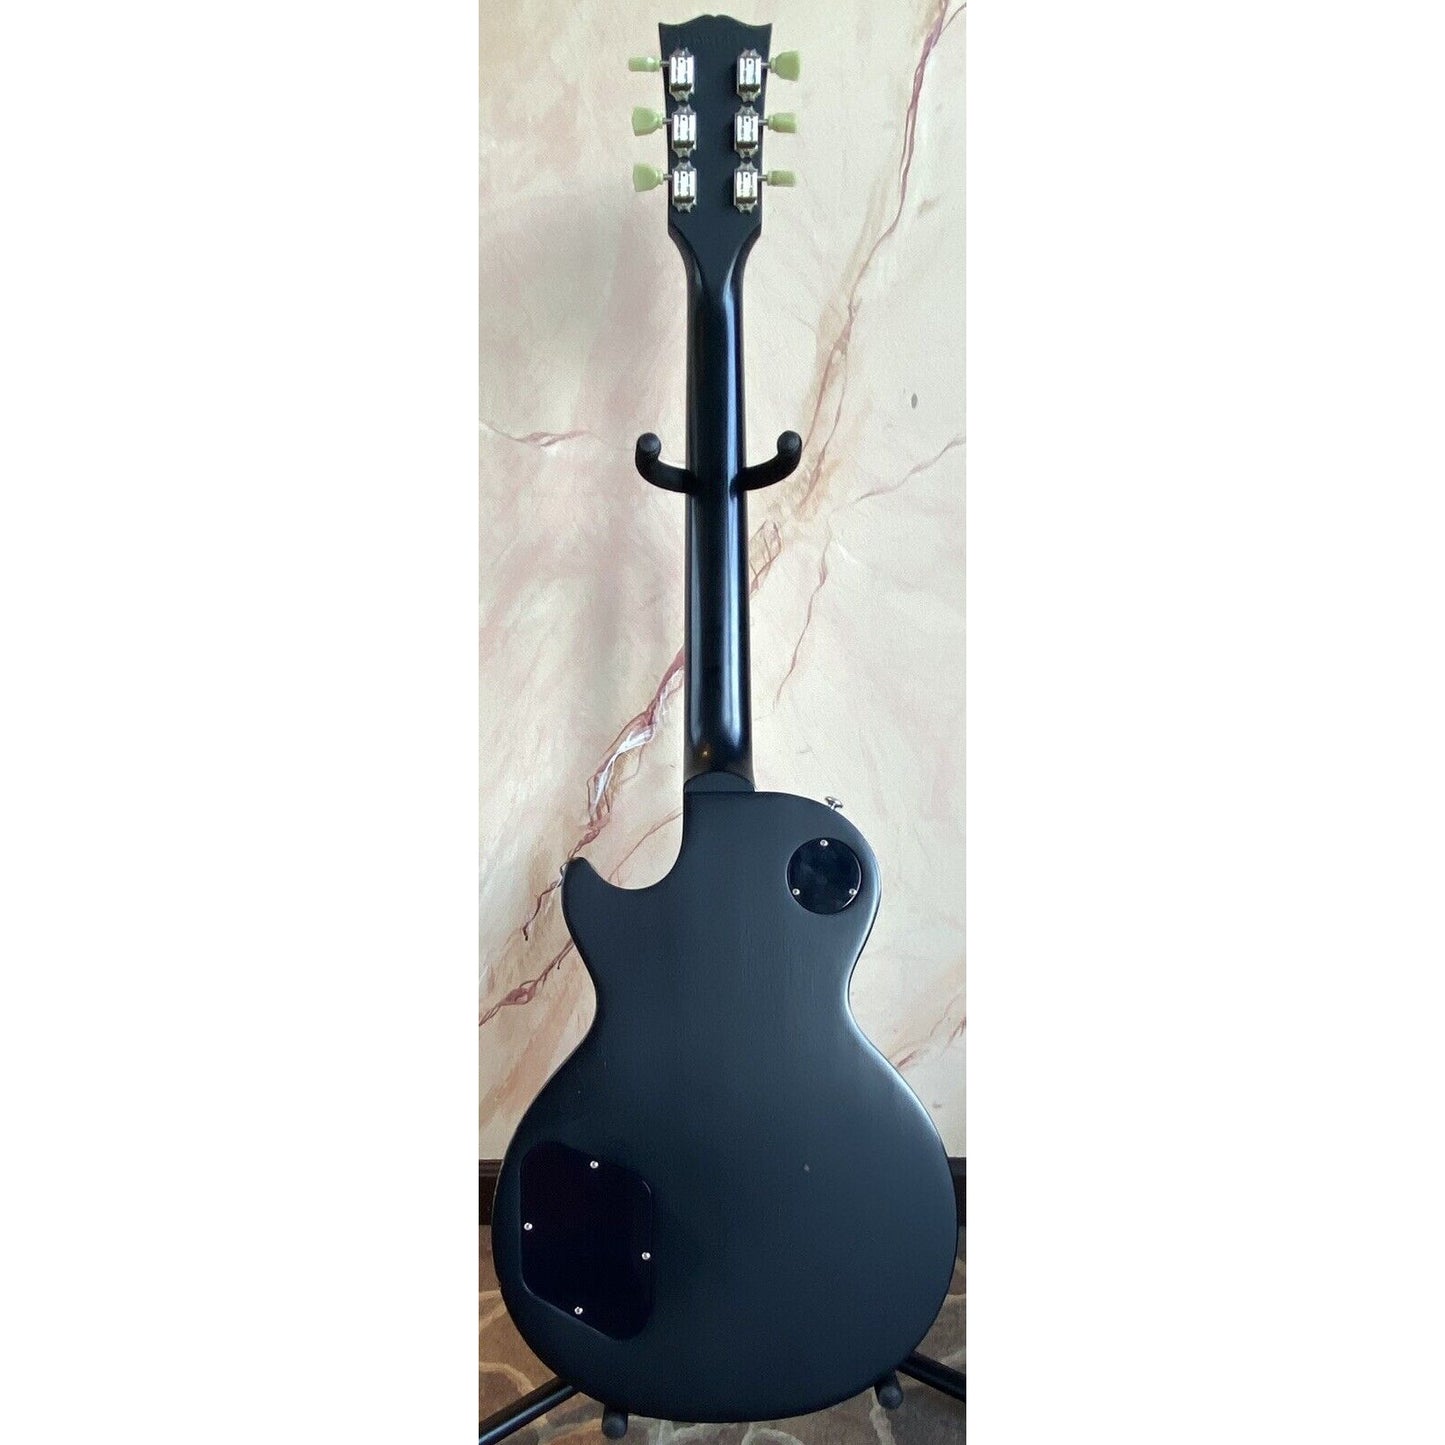 2014 Gibson USA Les Paul 120th Anniversary Edition Electric Guitar - Sunburst